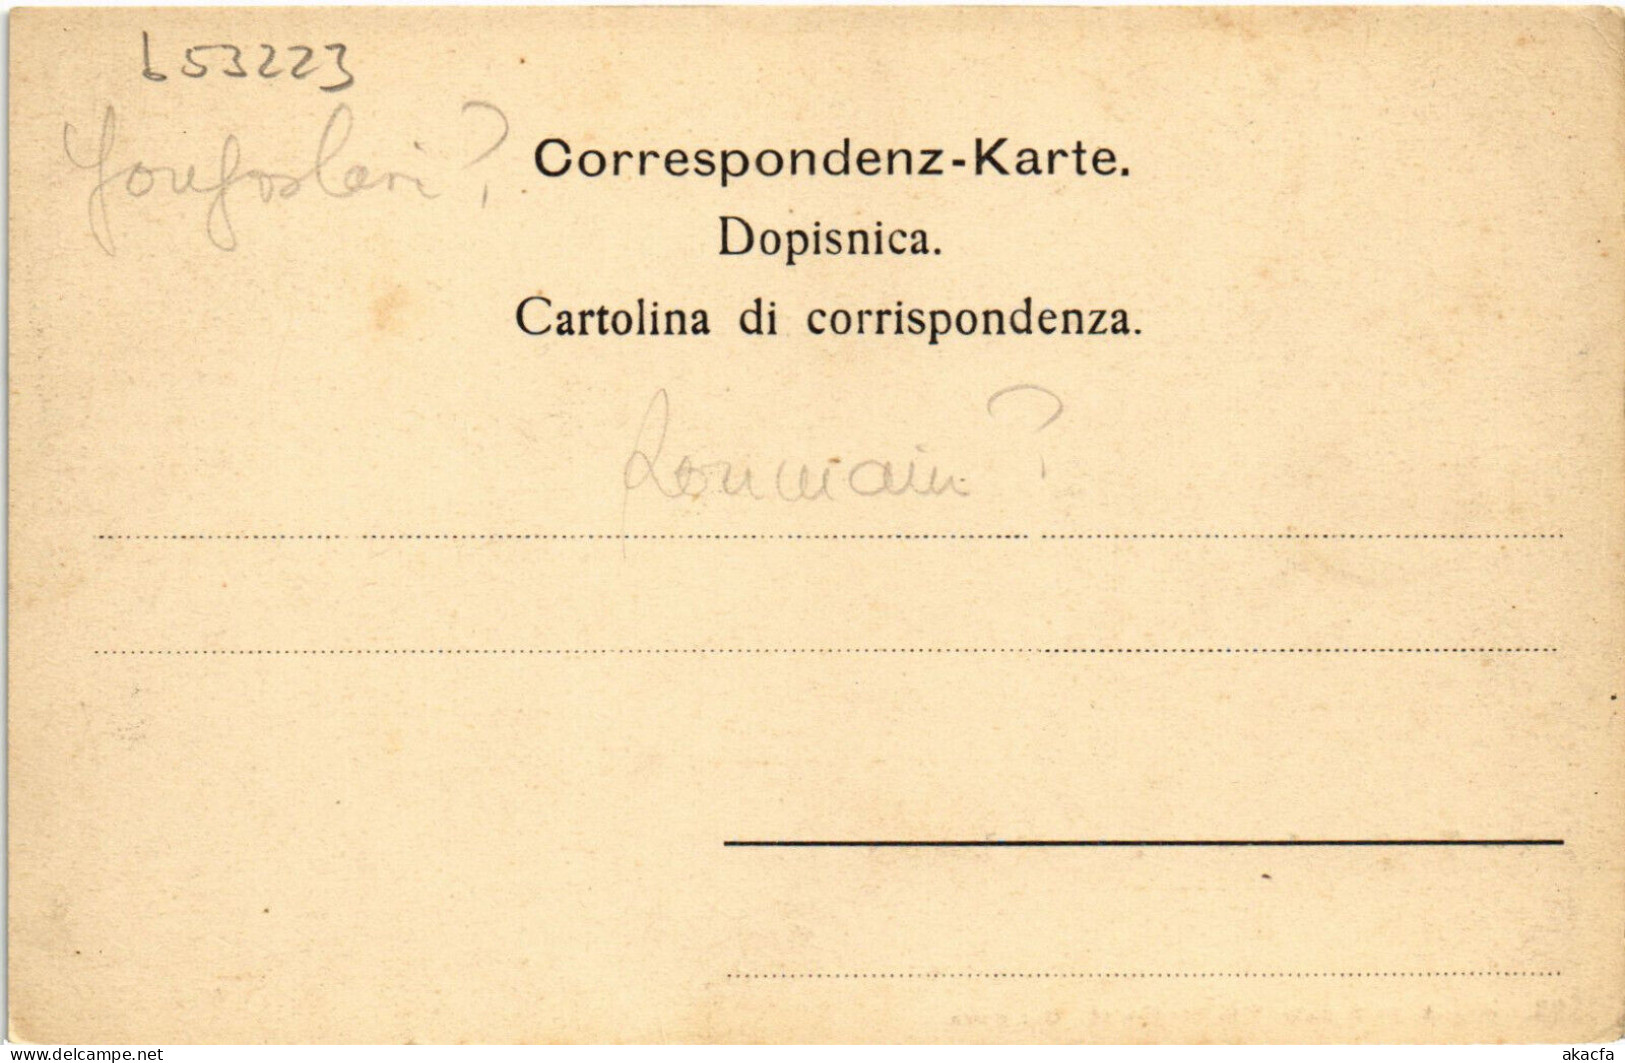 PC CROATIA, IKA, TOTALANSICHT WEGE NACH LOVRANA, Vintage Postcard (b53223) - Croacia